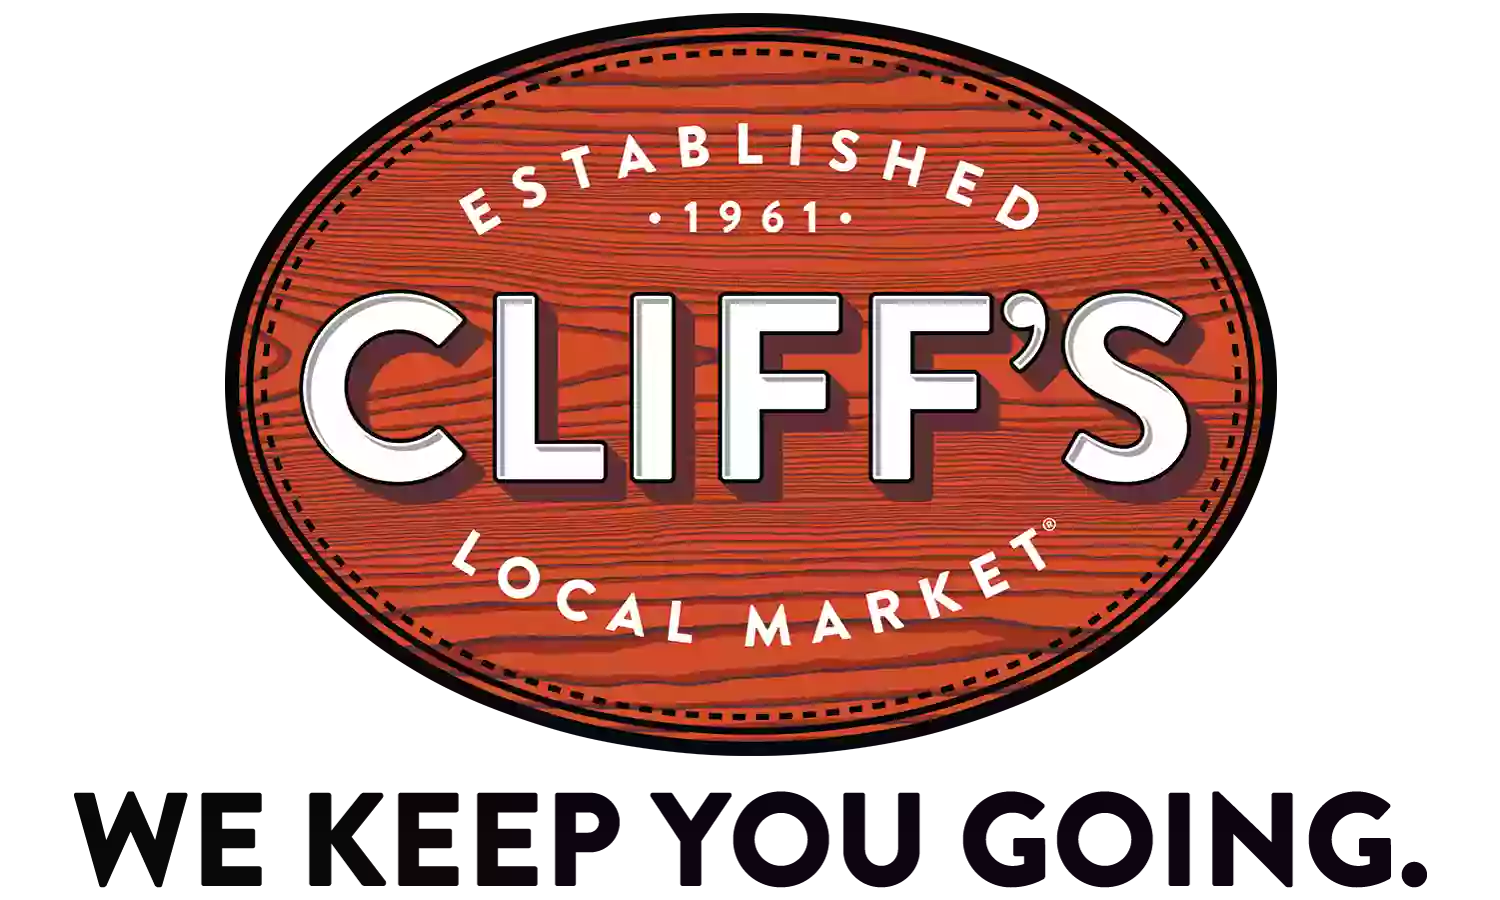 Cliff's Local Market